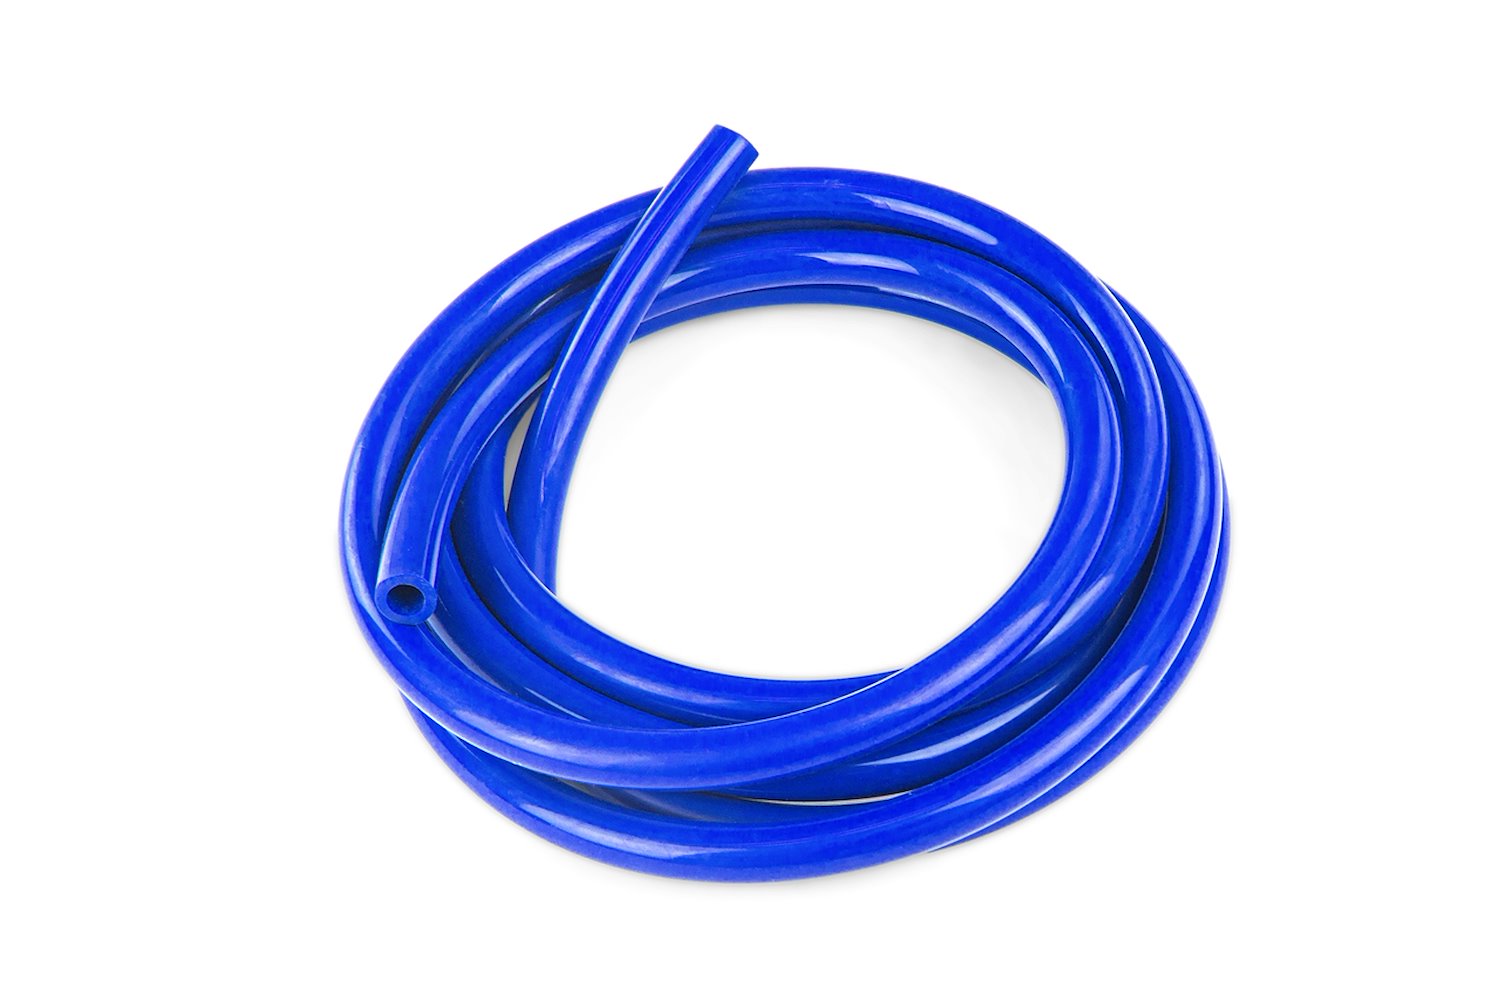 HTSVH3TW-BLUEx10 High-Temperature Silicone Vacuum Hose Tubing, 1/8 in. ID, 10 ft. Roll, Blue